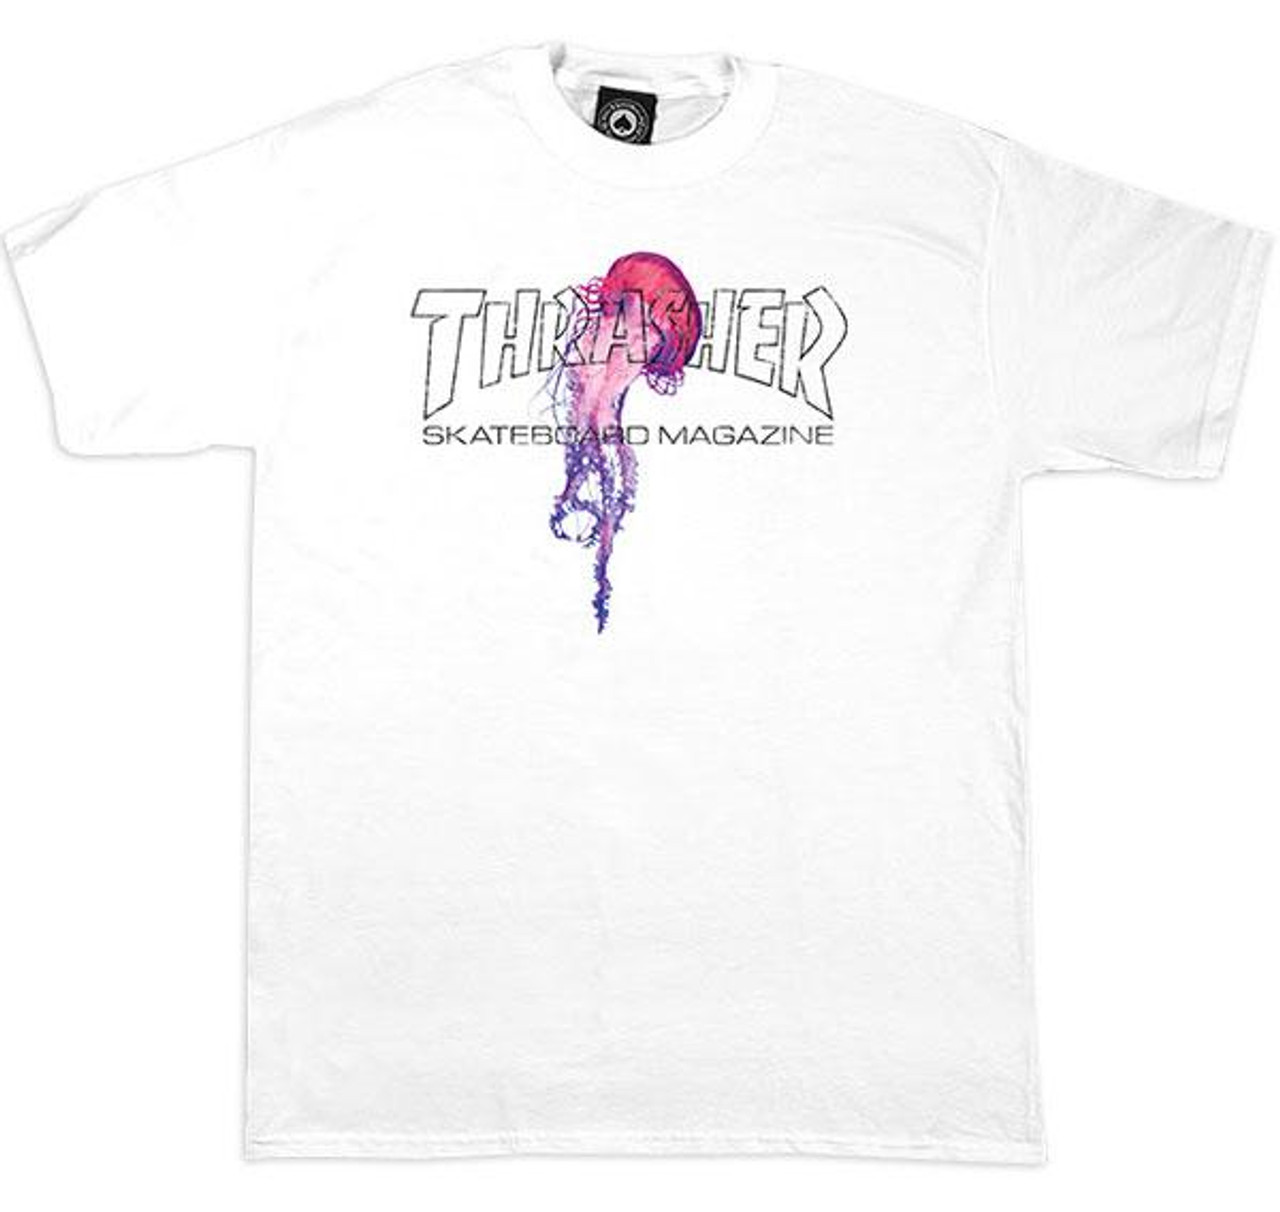 Thrasher Pink Shirt – Wind Vandy